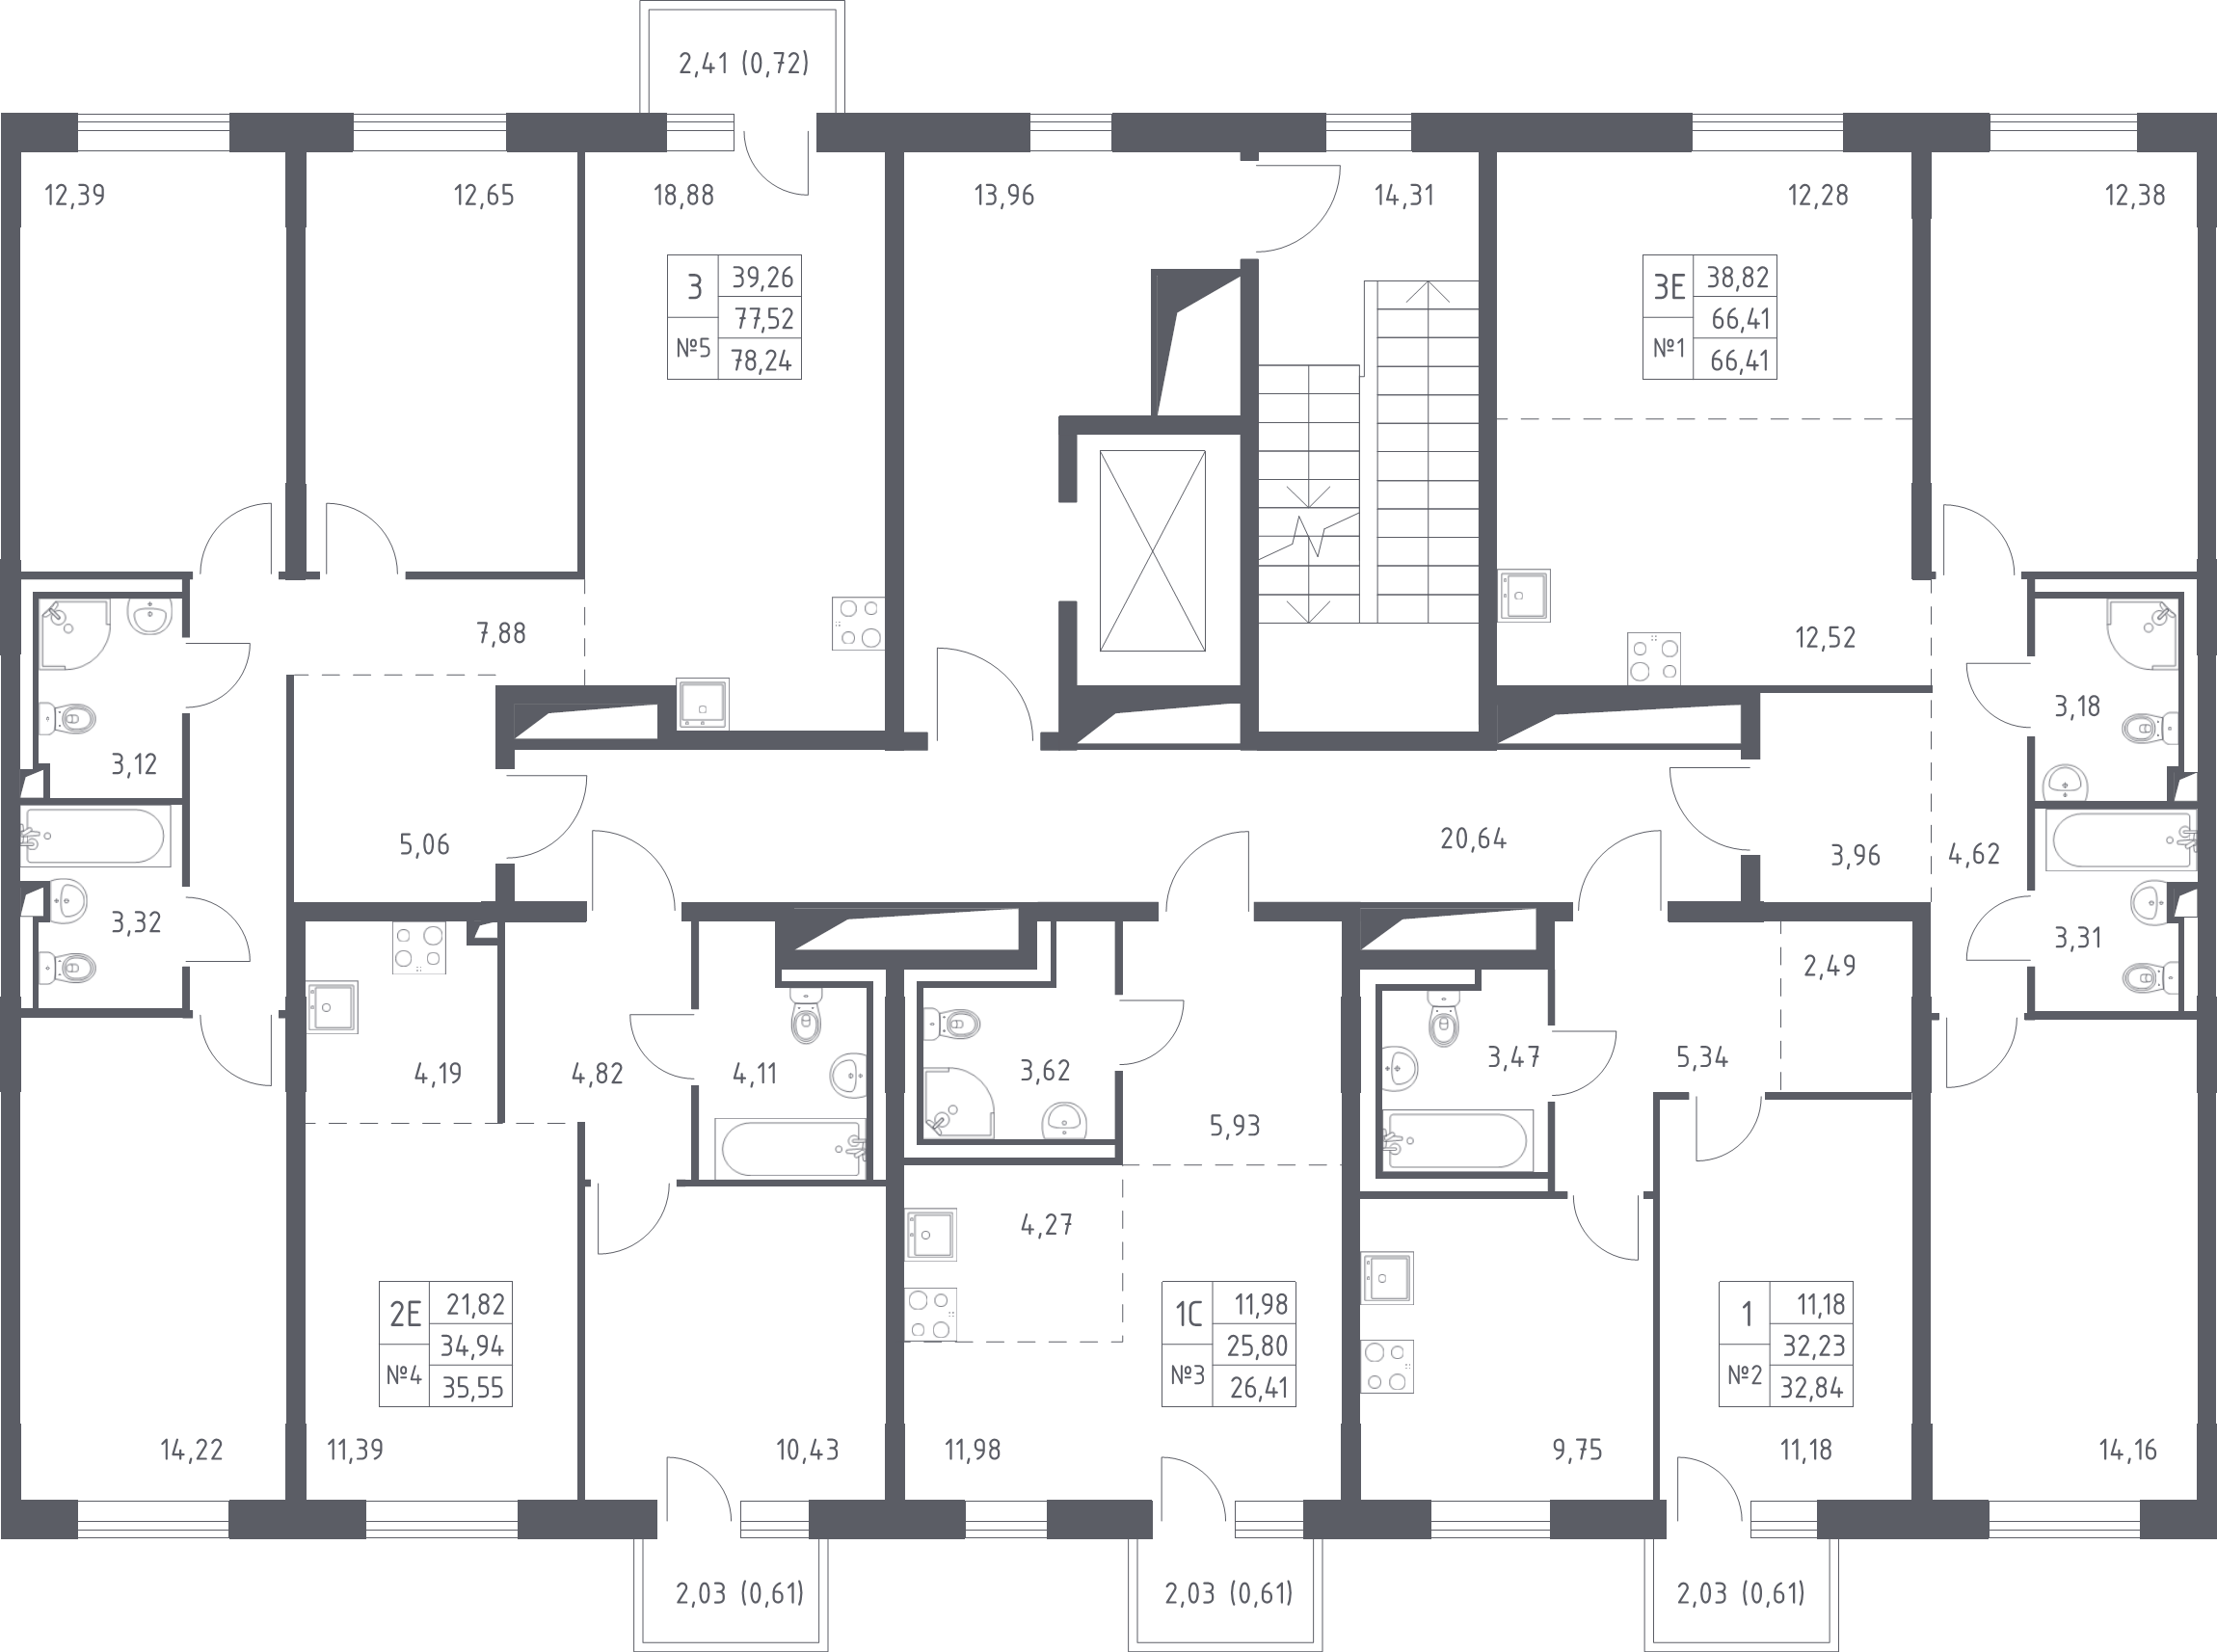 3-комнатная (Евро) квартира, 66.41 м² - планировка этажа